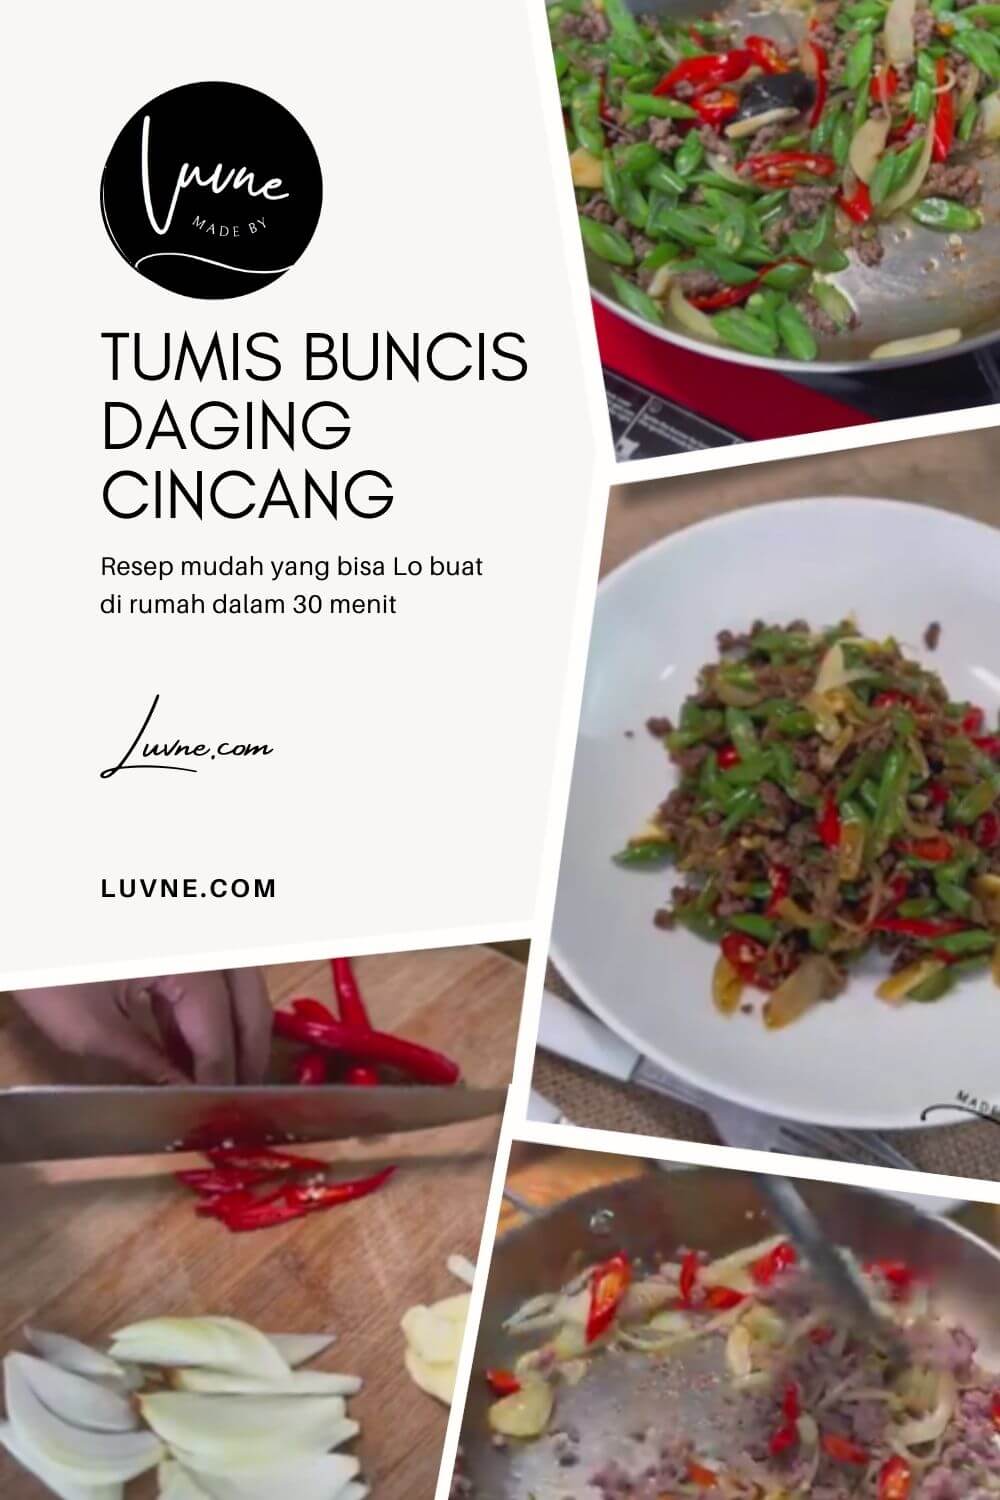 Tumis buncis daging cincang